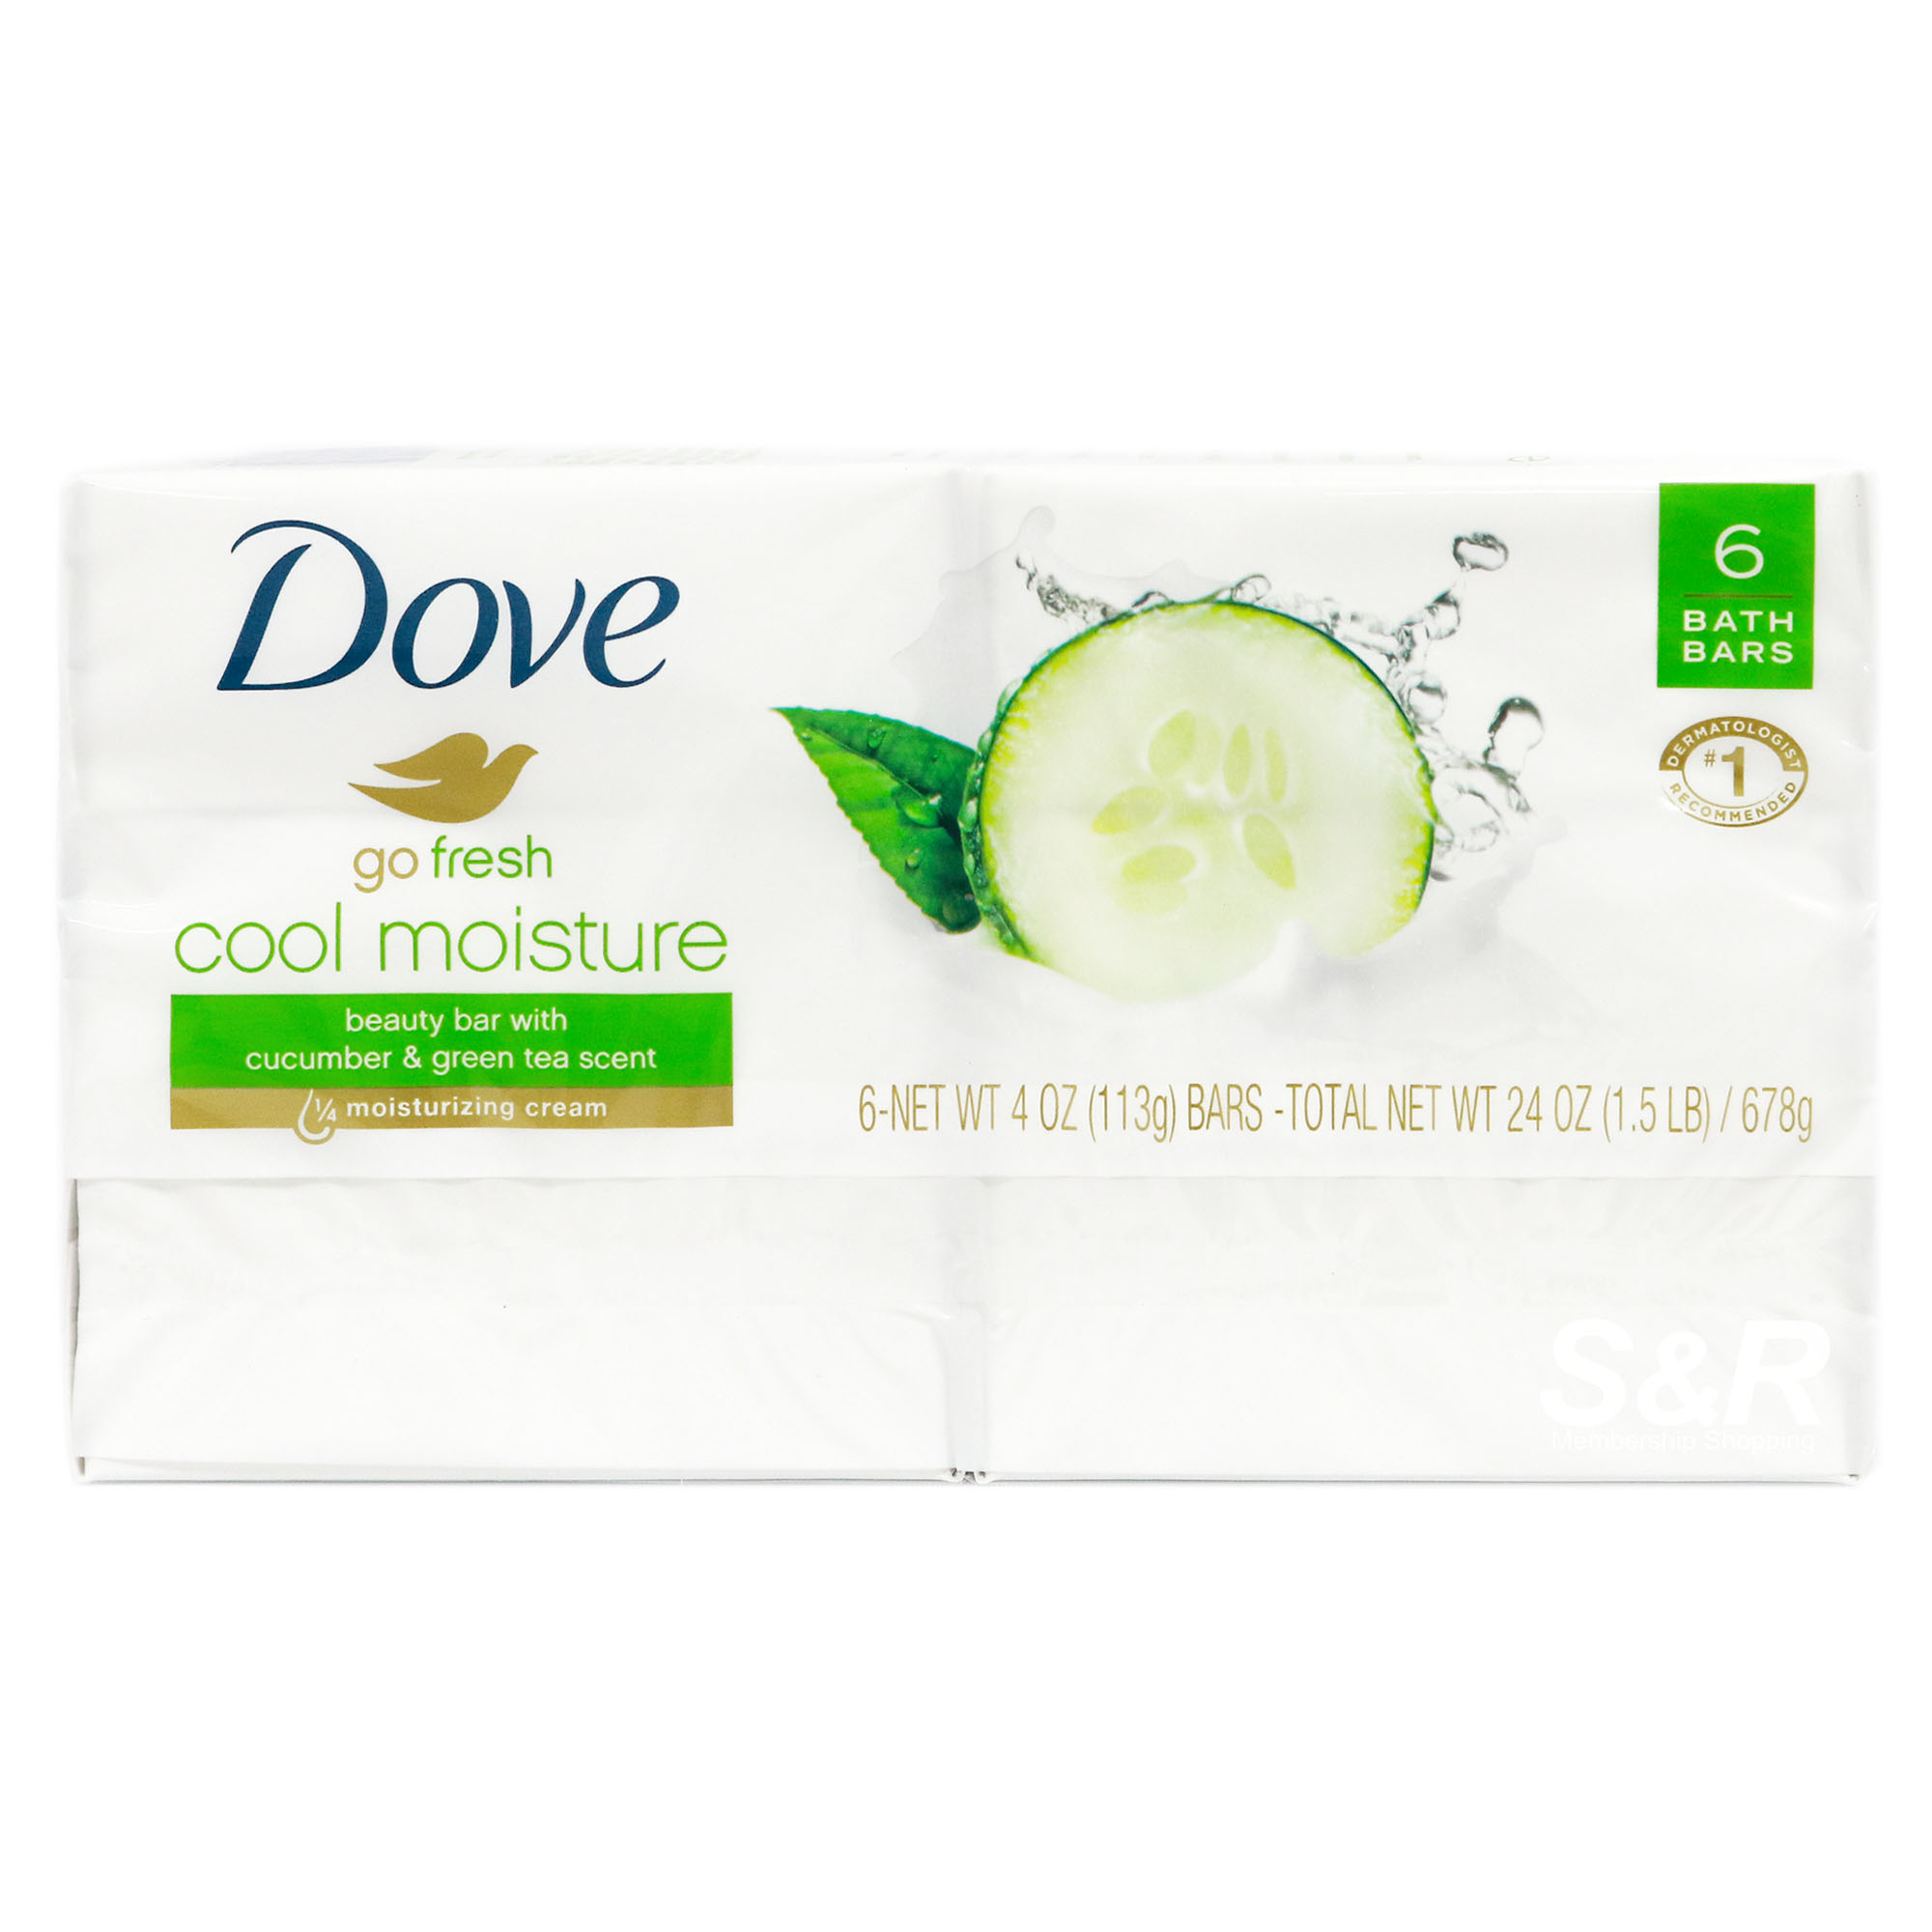 Dove Go Fresh Cool Moisture Cucumber and Green Tea Scent Beauty Bar 6pcs